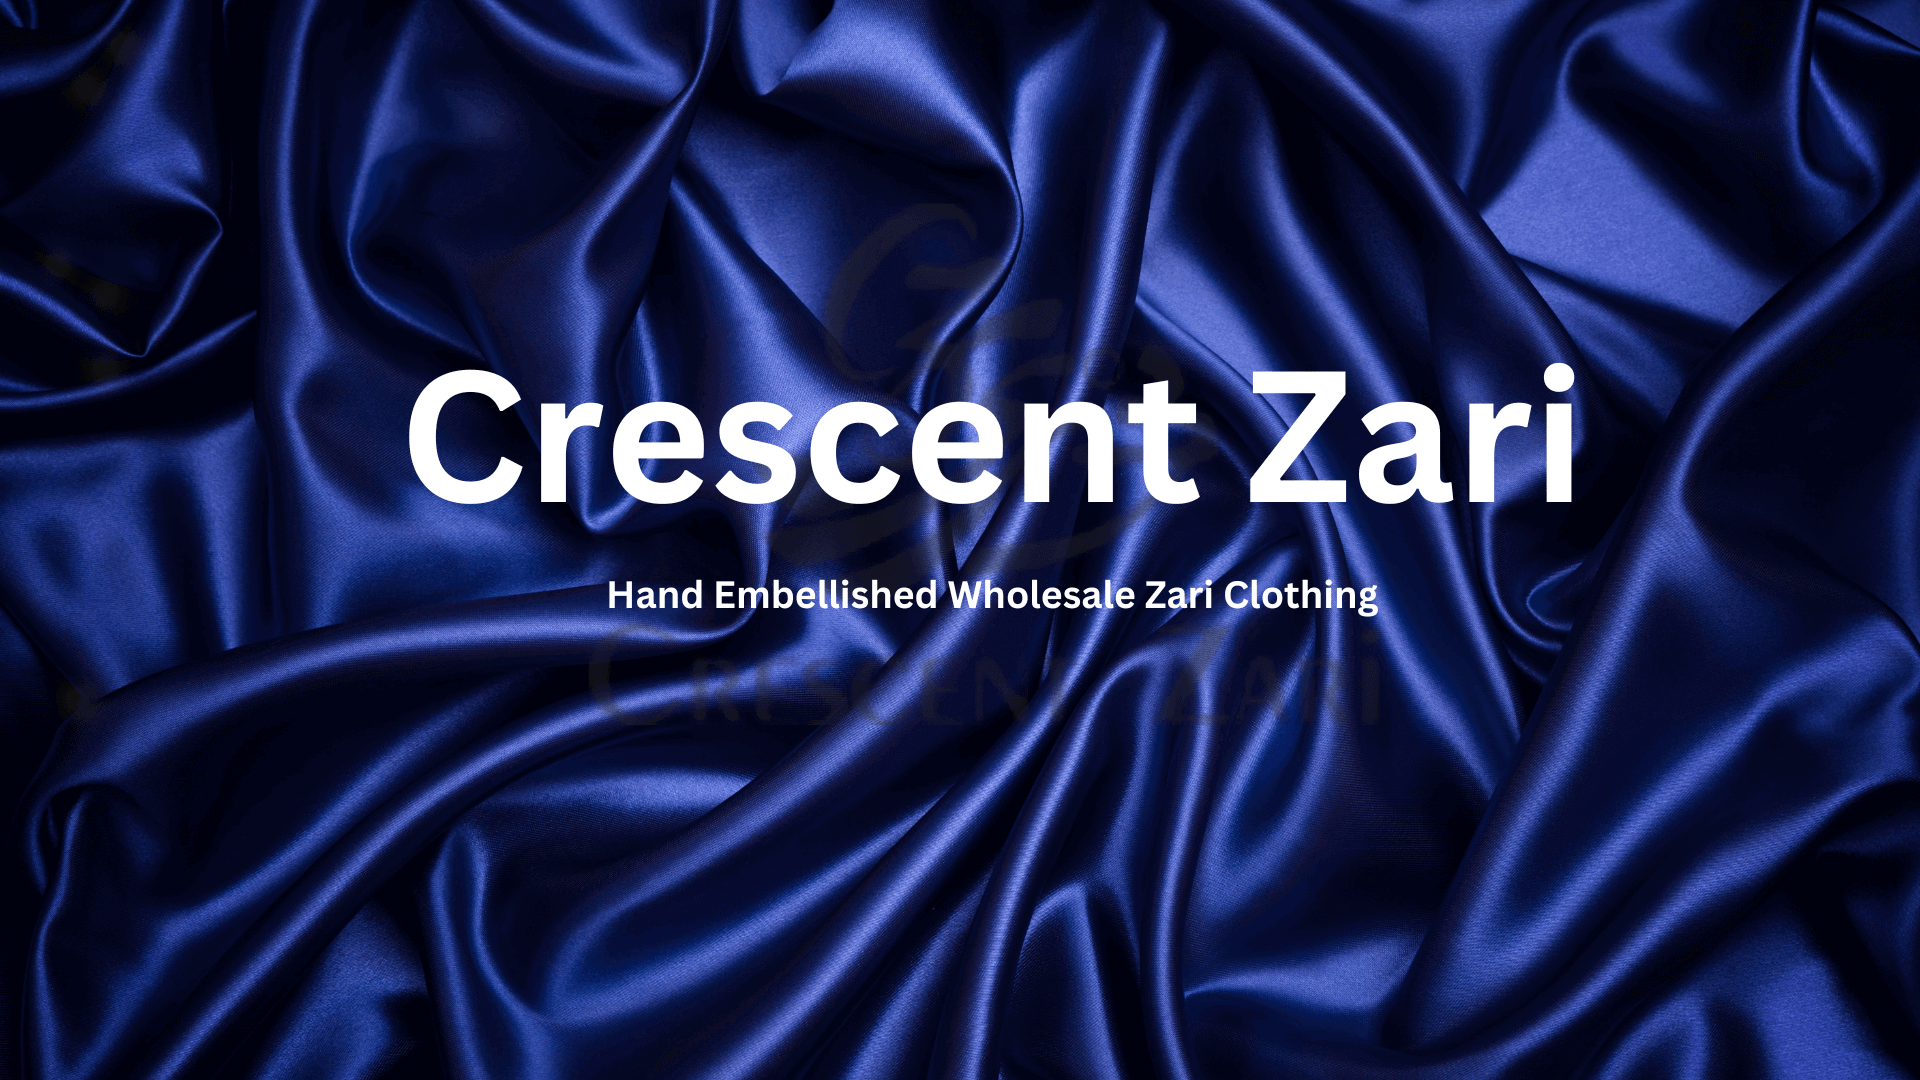 Crescent Zari